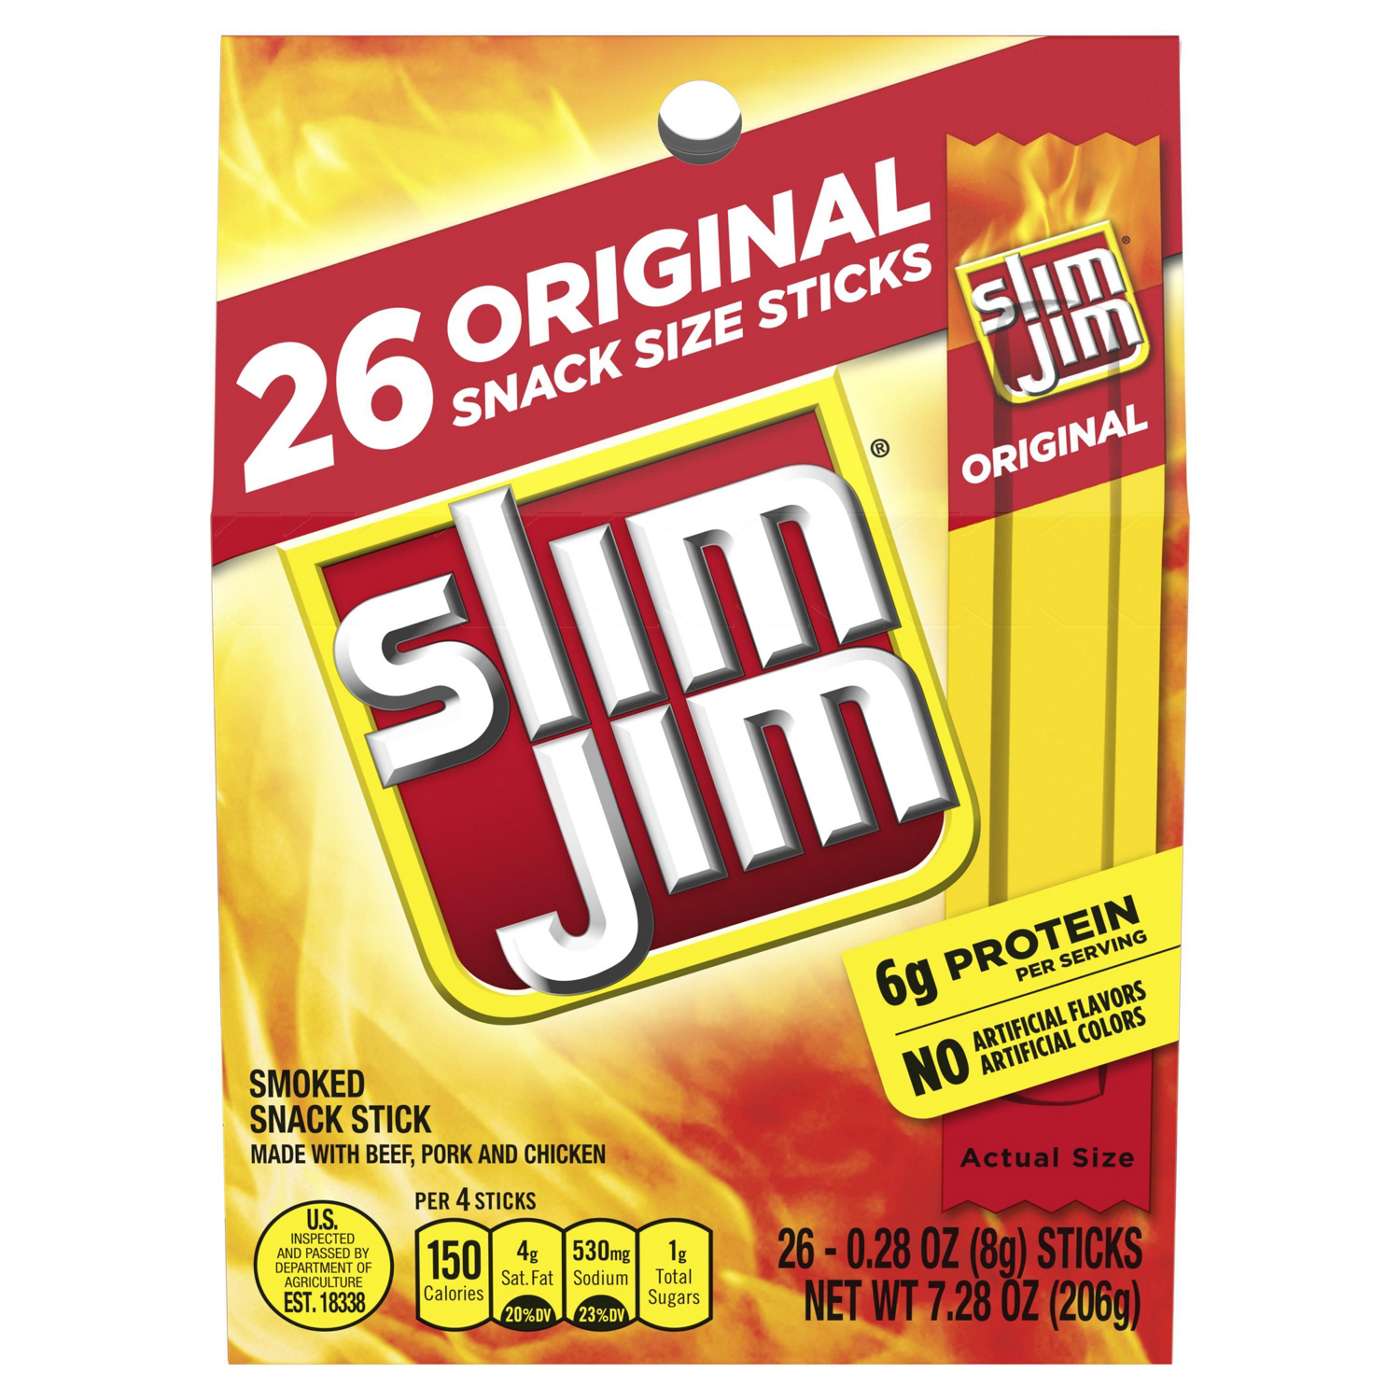 Slim Jim Original Snack Size Sticks; image 1 of 2